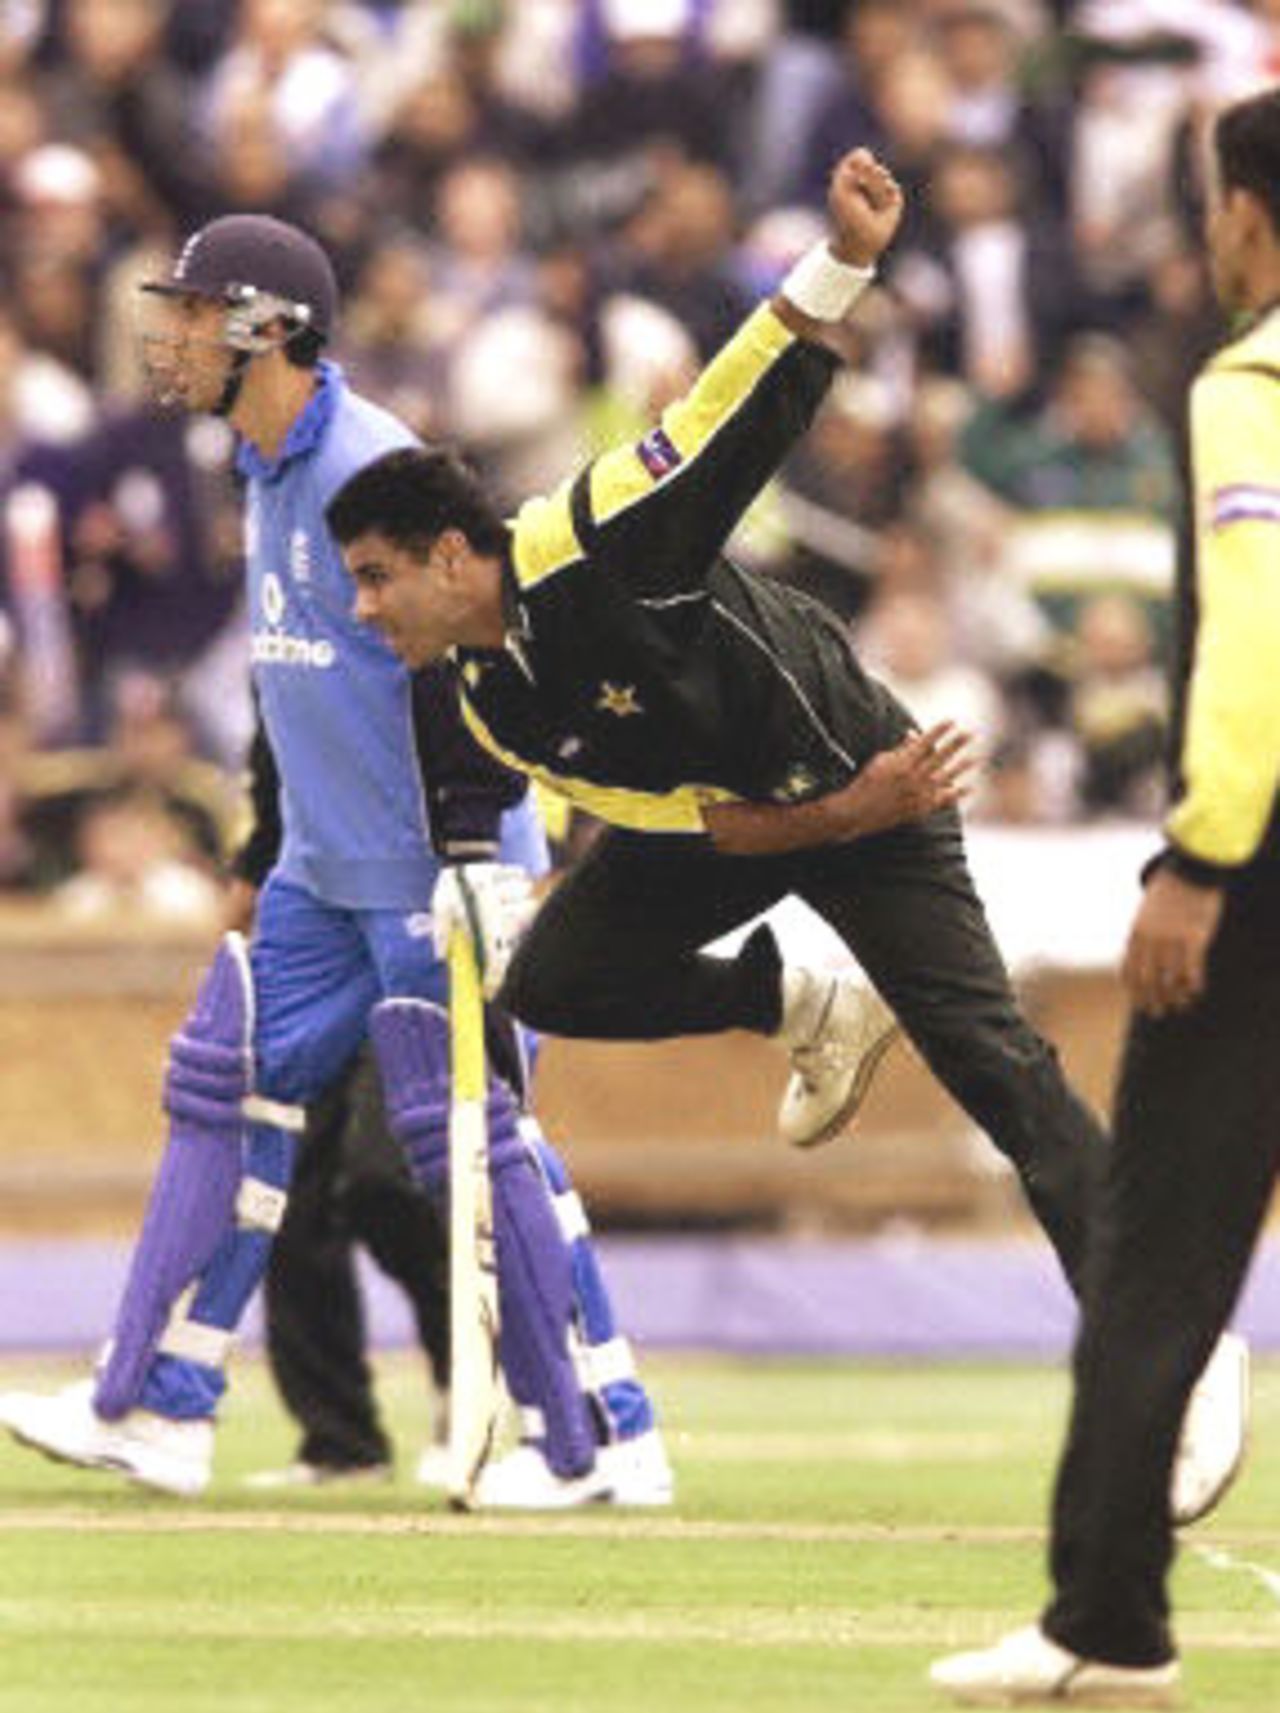 Waqar Younis sends down a thunderbolt as  Hollioake look on, 7th ODI at Headingley, 17 June 2001.